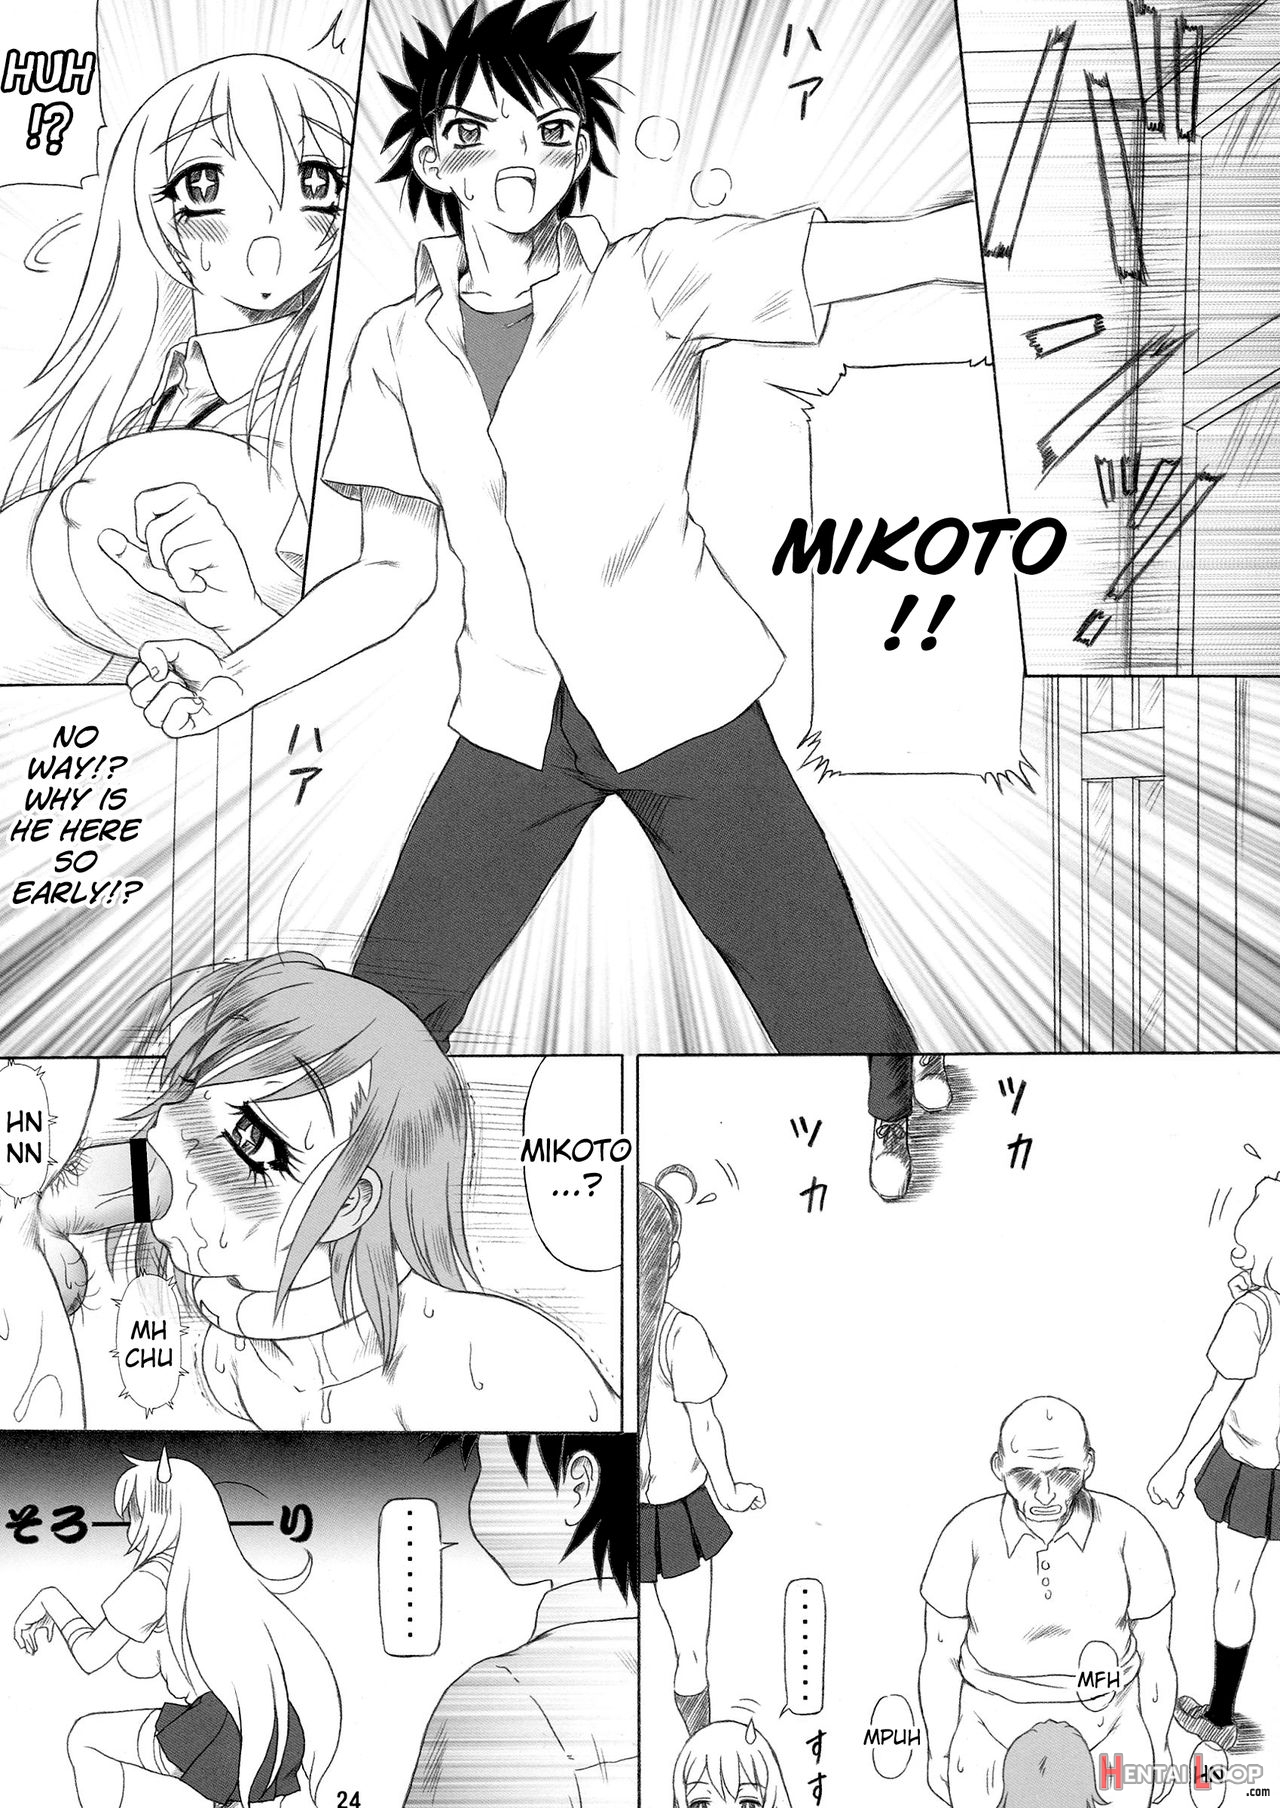 Uiharu Mode Mikoto Style page 24